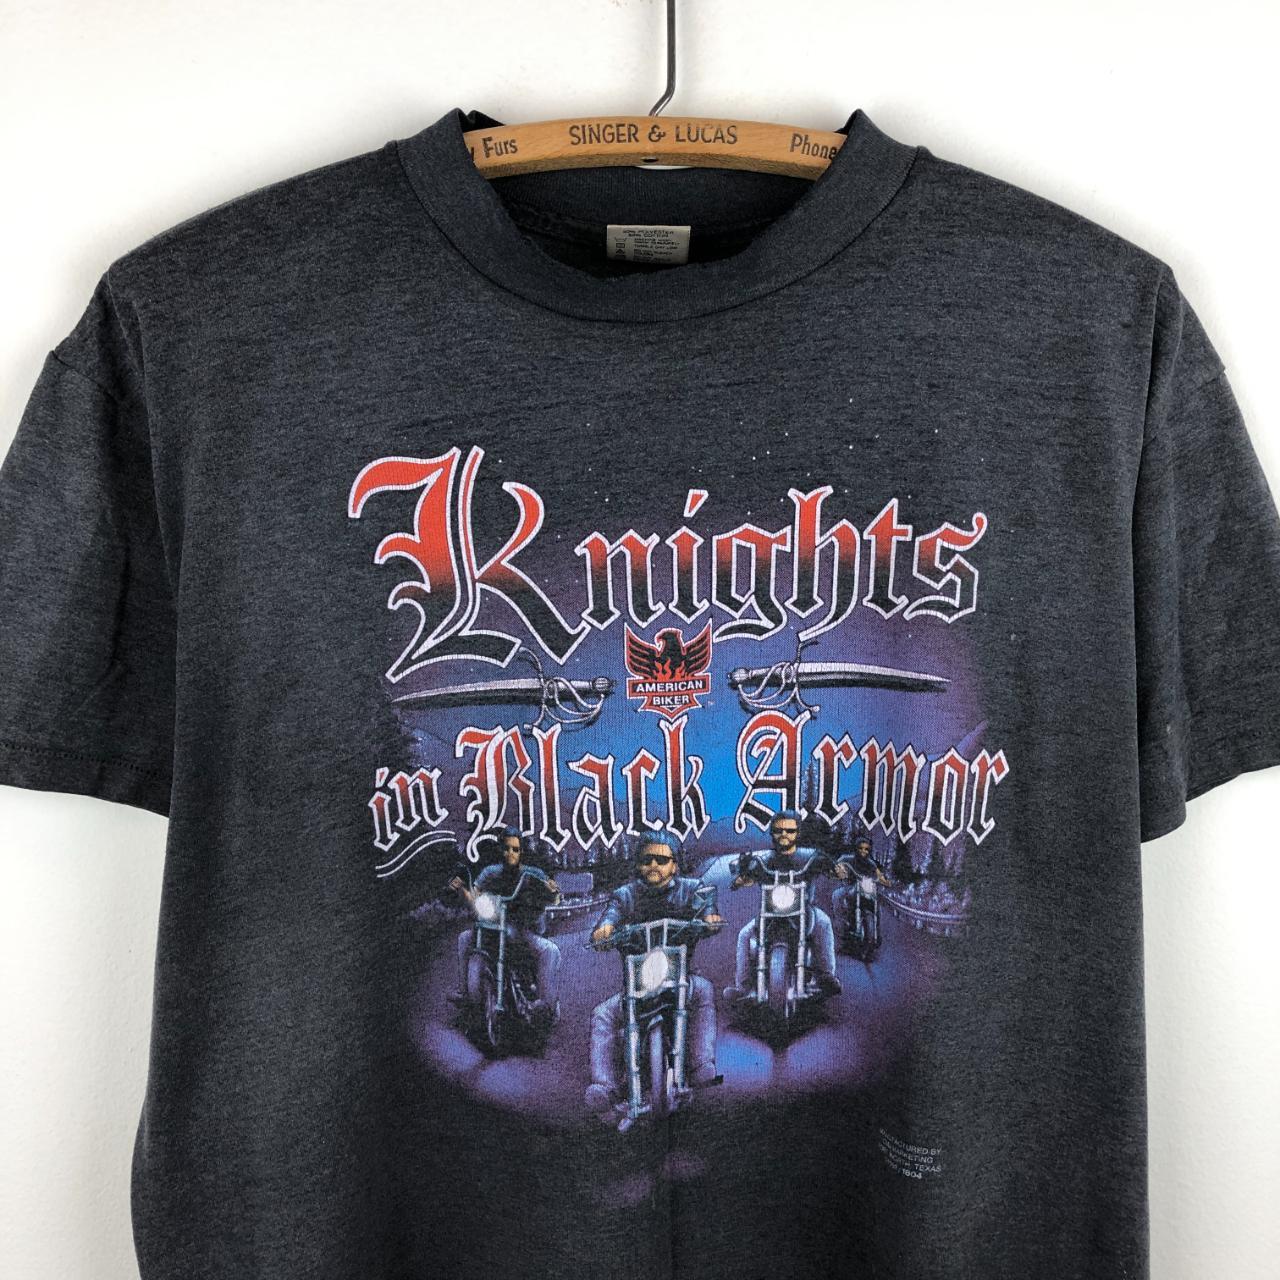 Vintage 1992 Texas T-shirt size Large